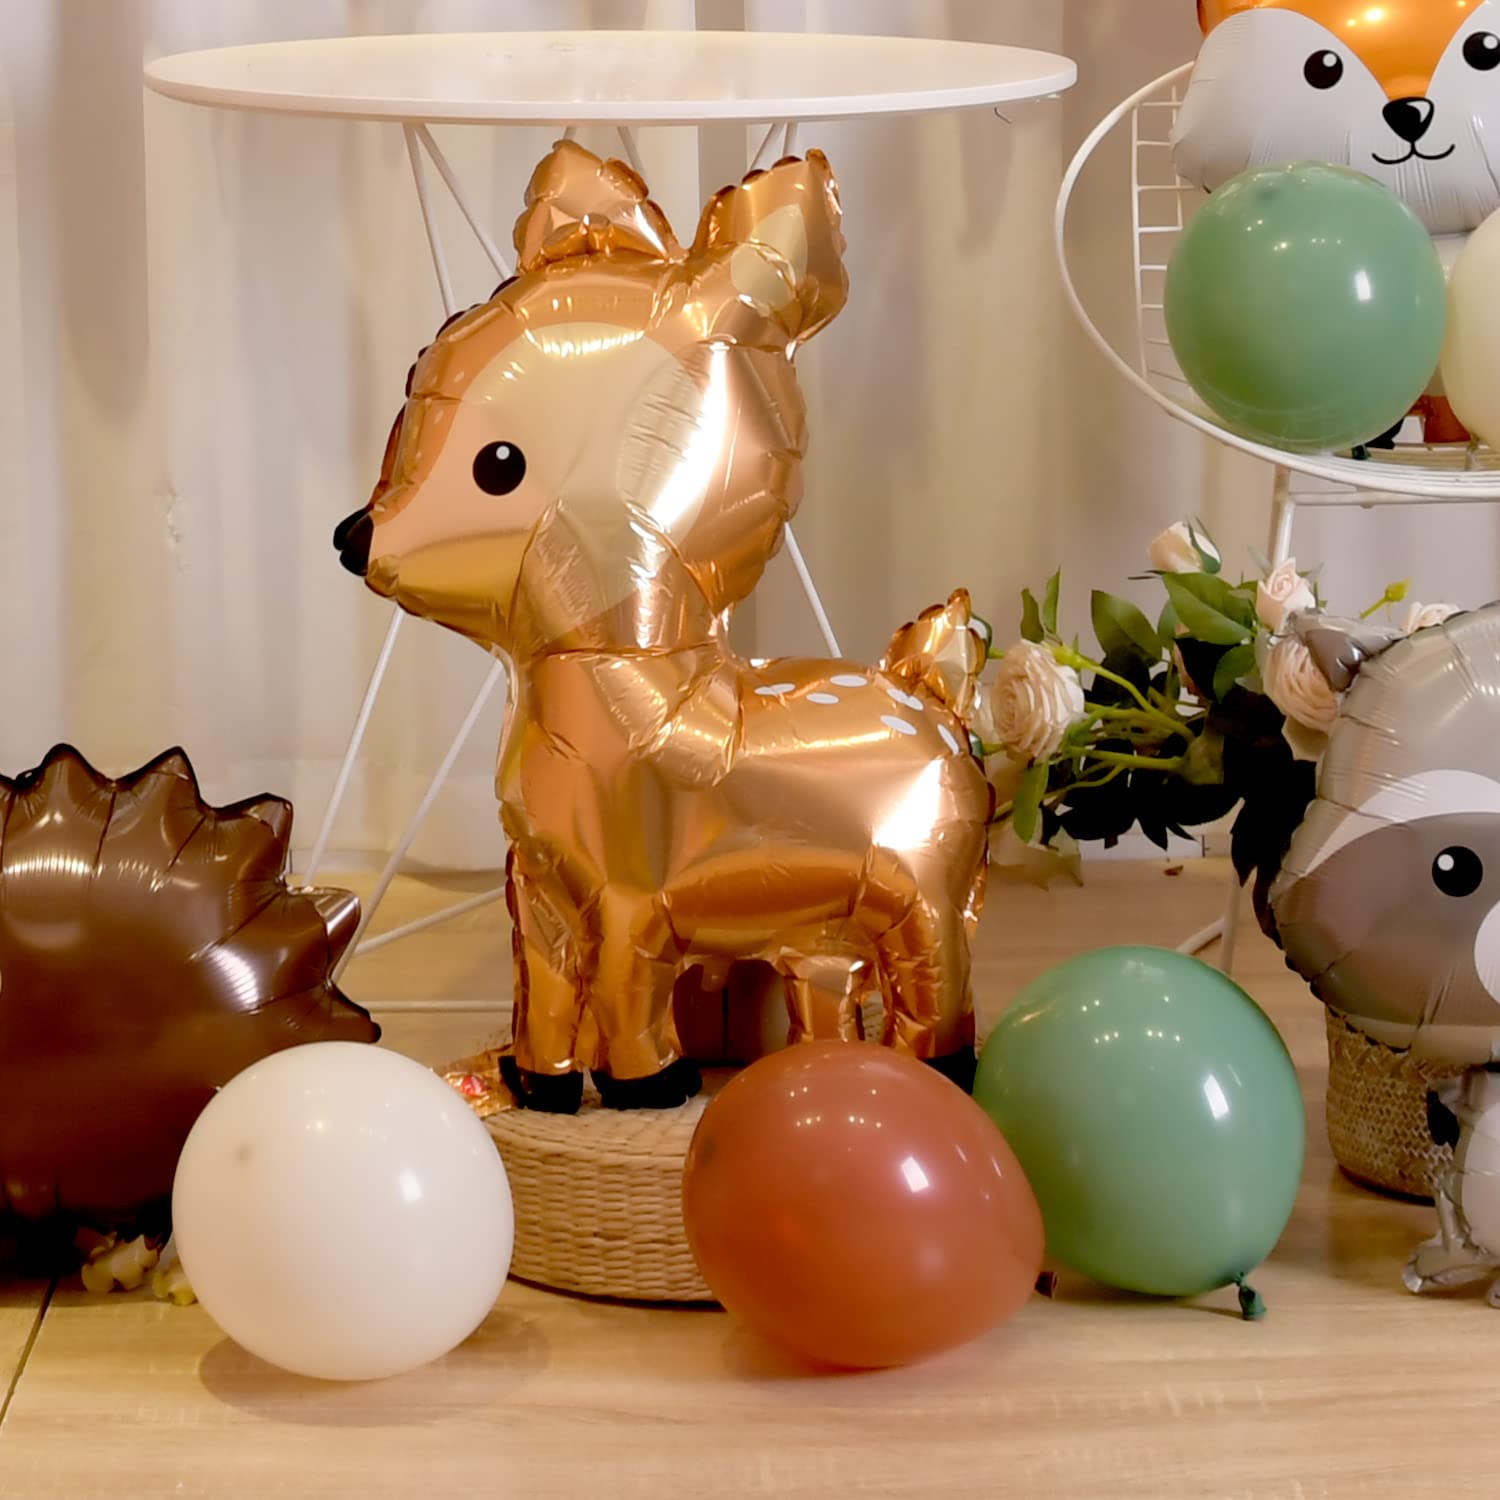 Forest Animal Theme Birthday Balloon Decorations